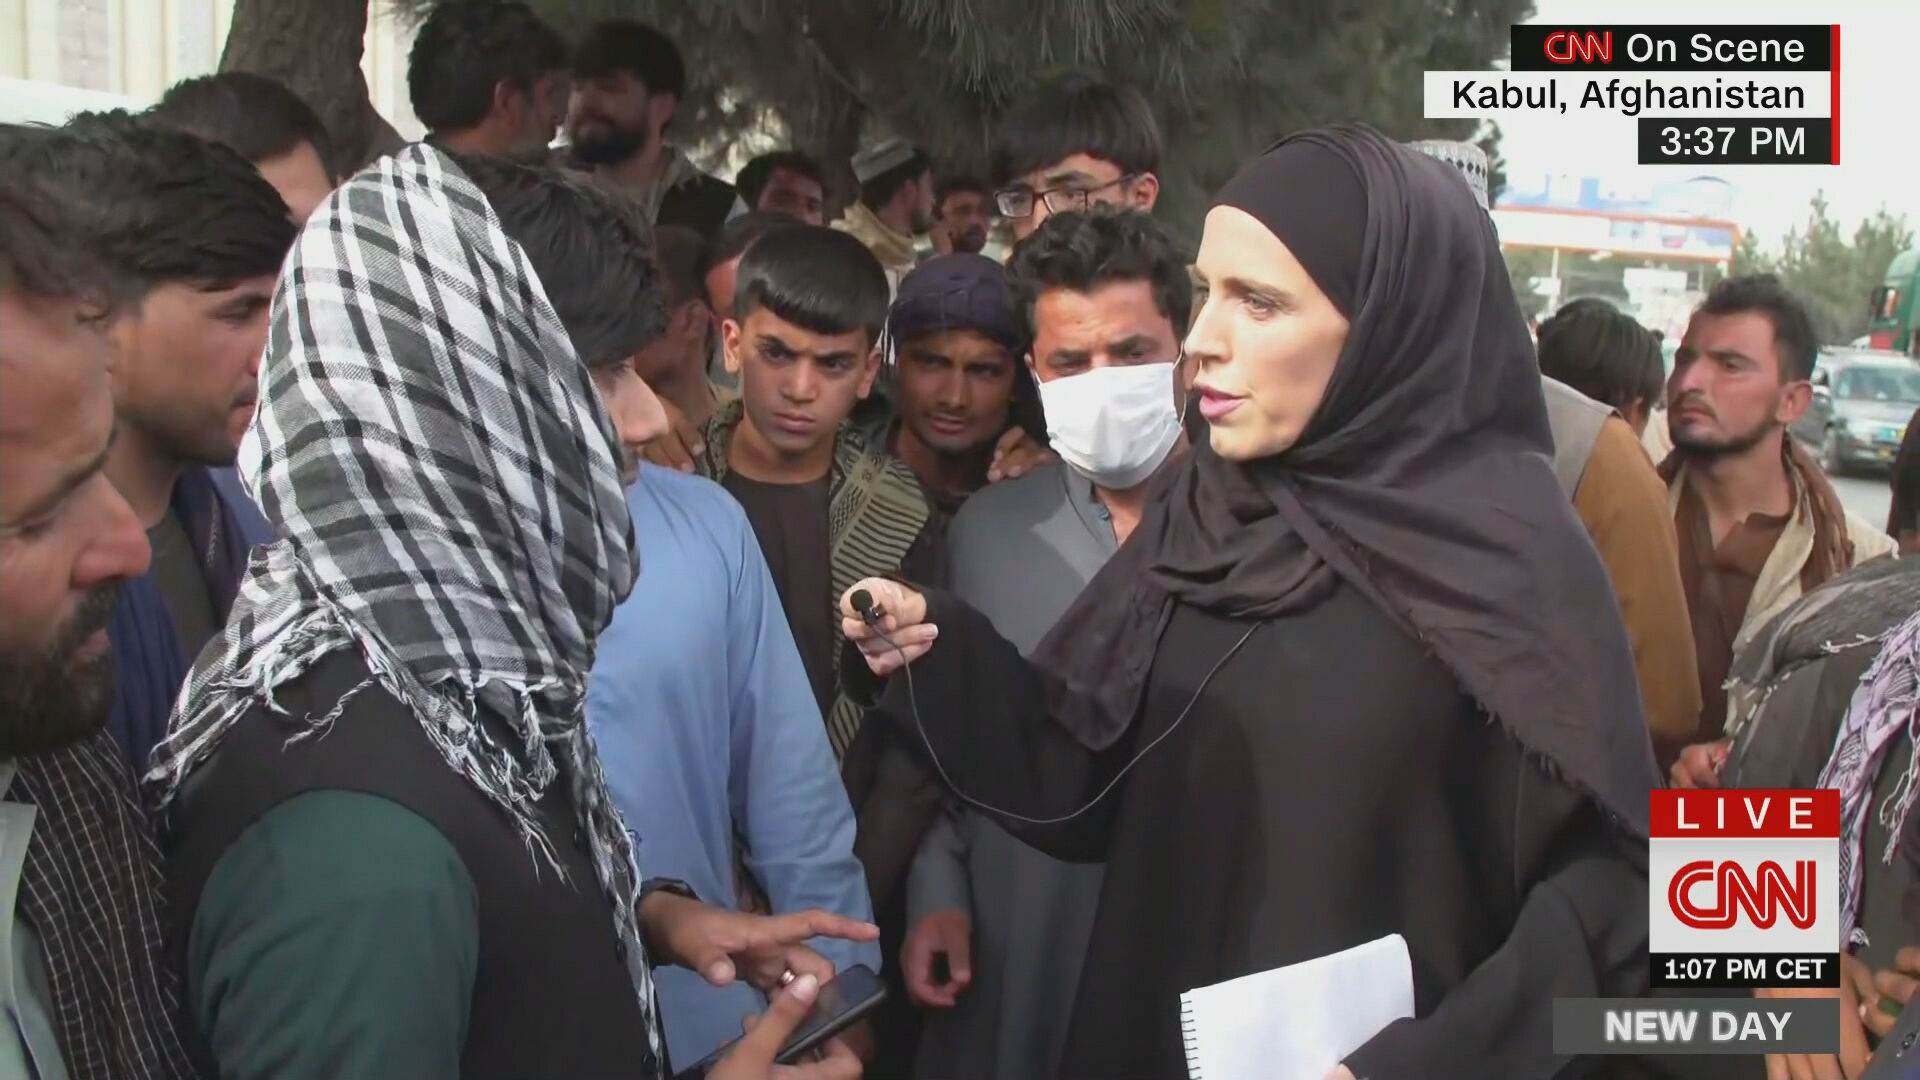 A correspondente da CNN Internacional Clarissa Ward em Cabul